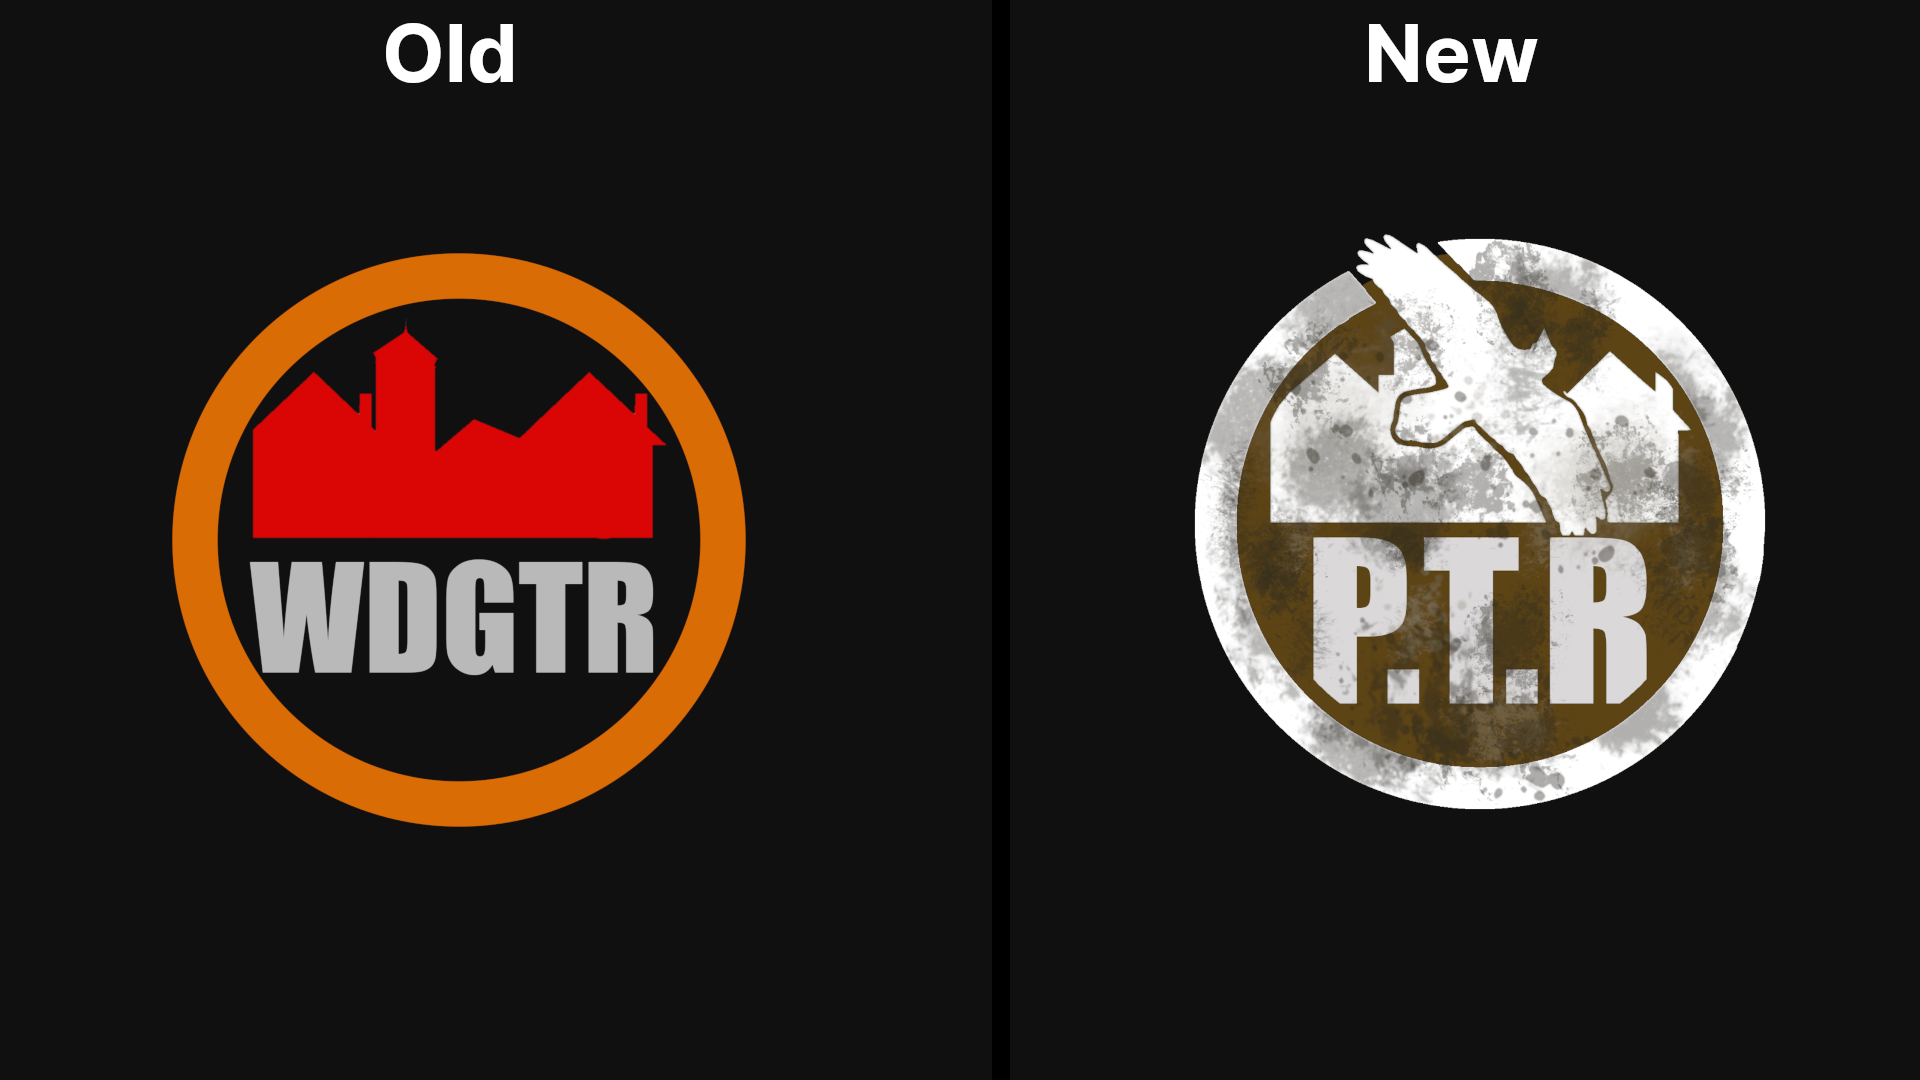 Old New logos